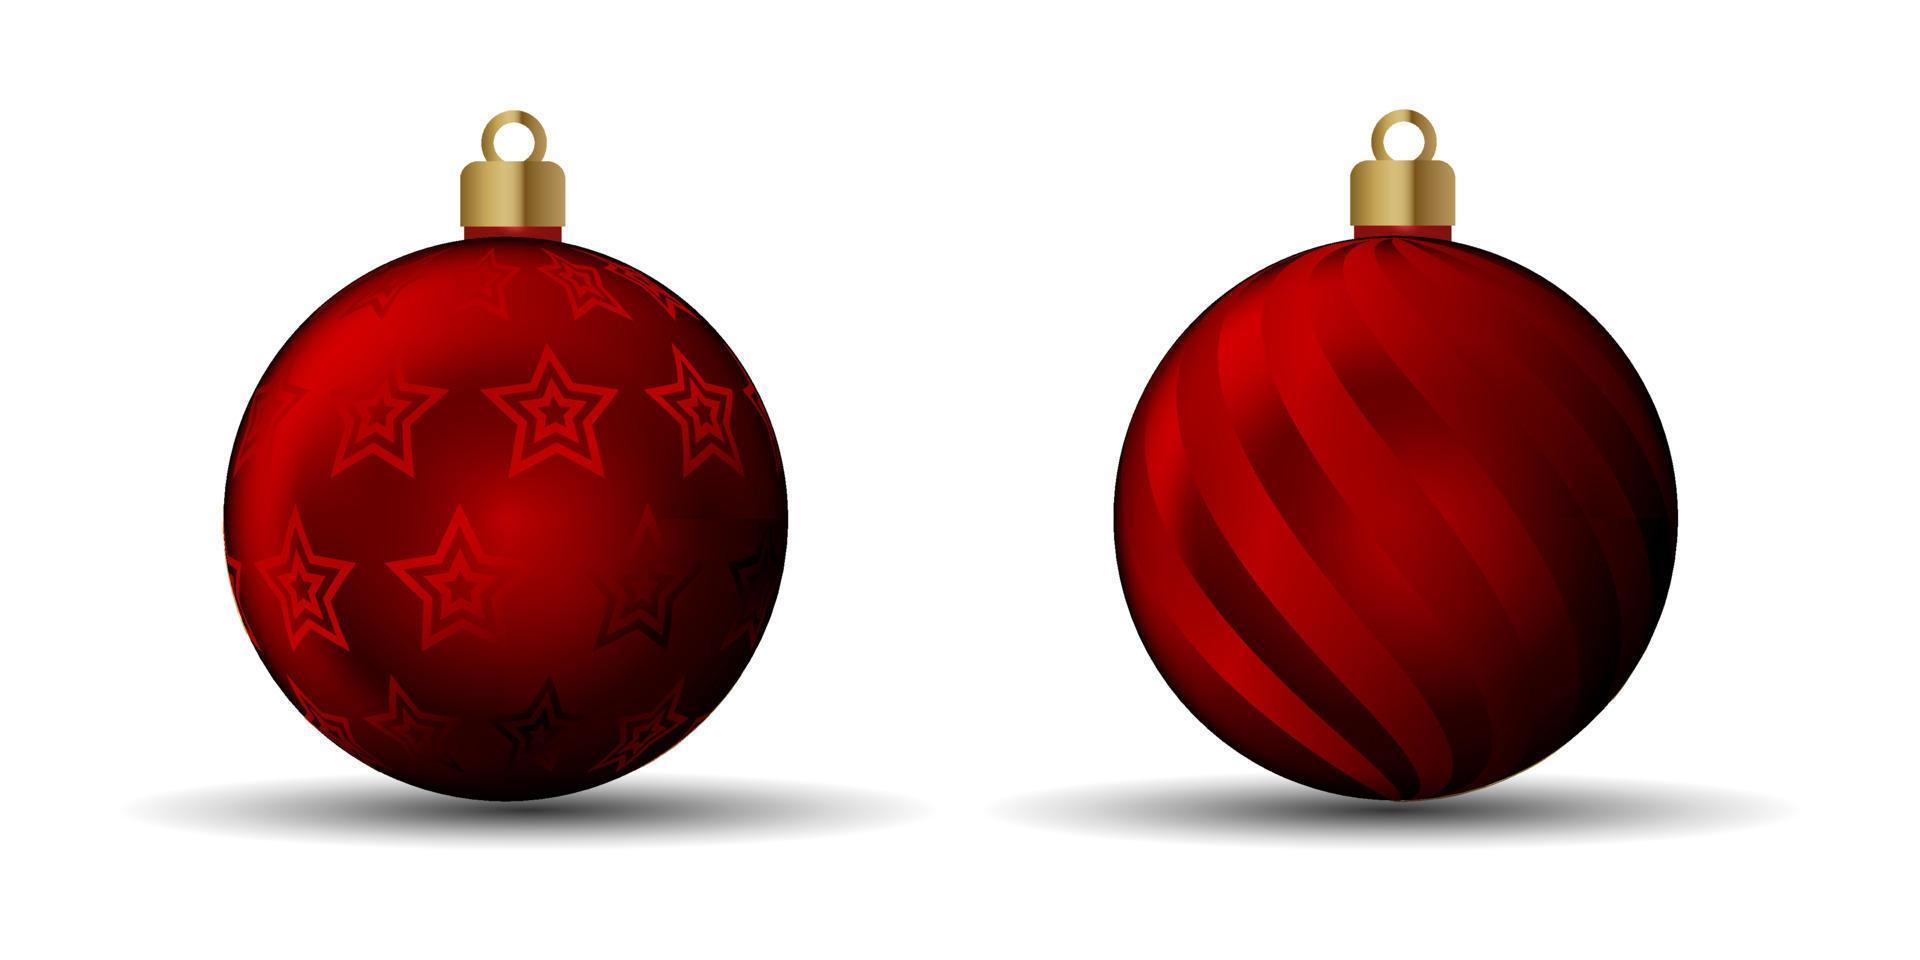 Weihnachtskugel rot gold Farbe mit Ornamenten Vektor-Illustration isolierten Hintergrund. vektor